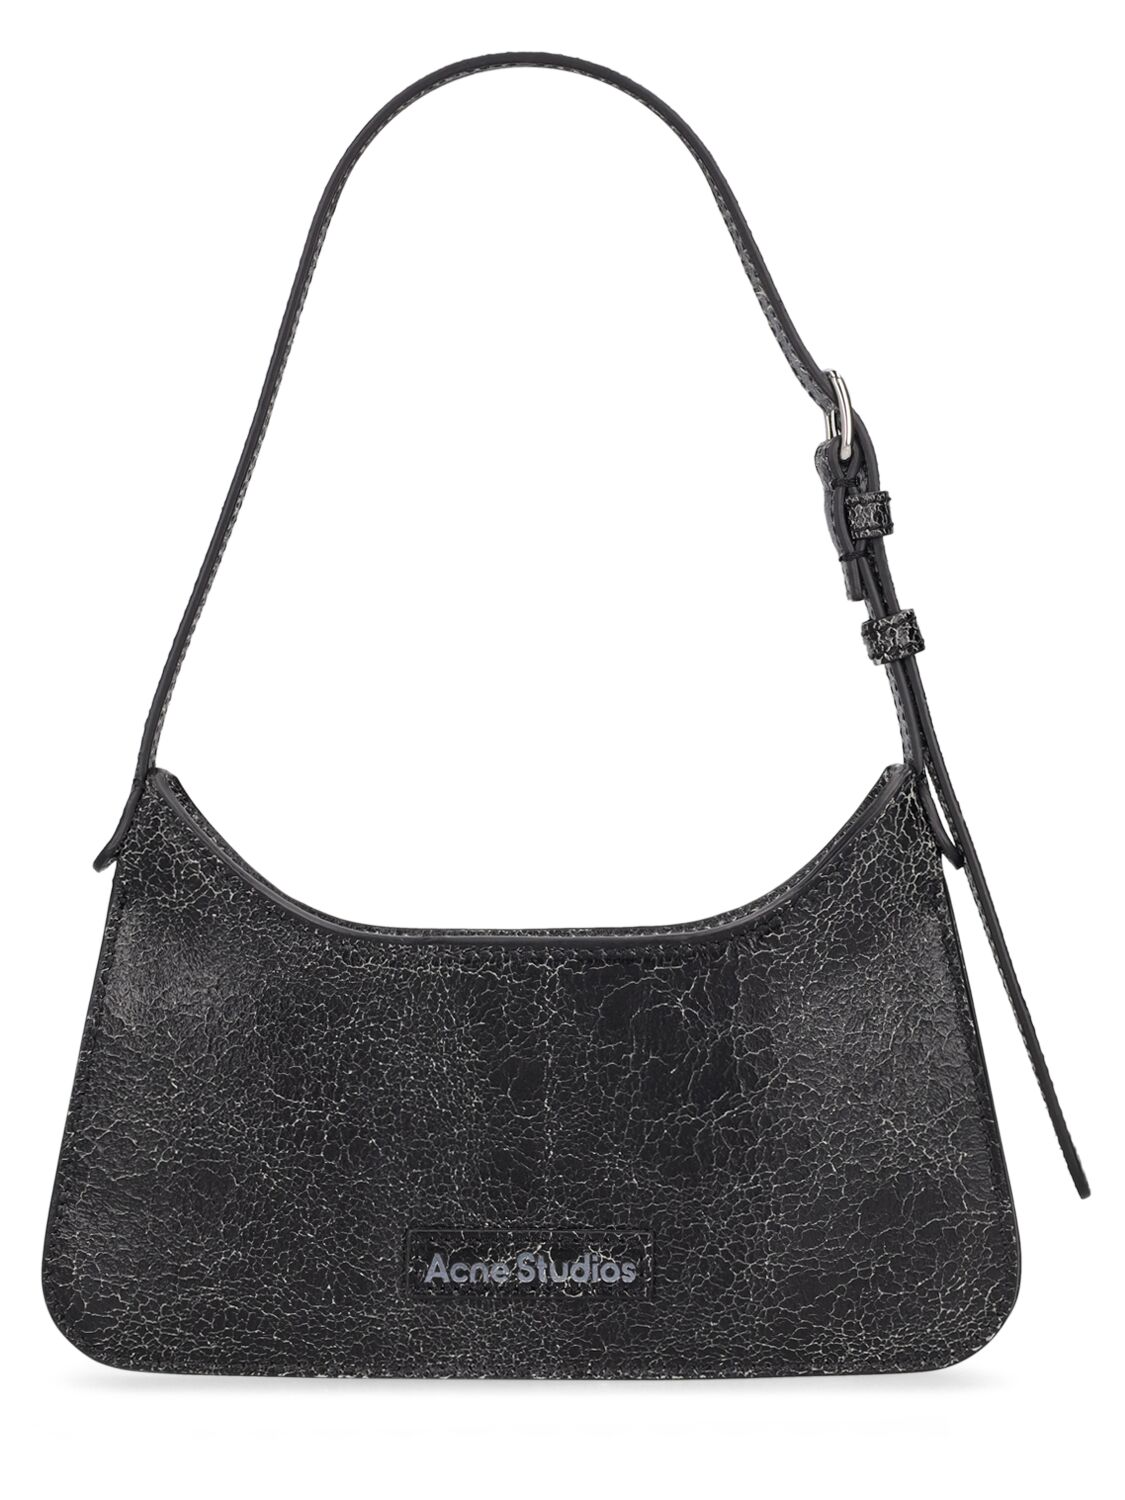 Acne Studios Micro Platt Crackle Leather Shoulder Bag In Black